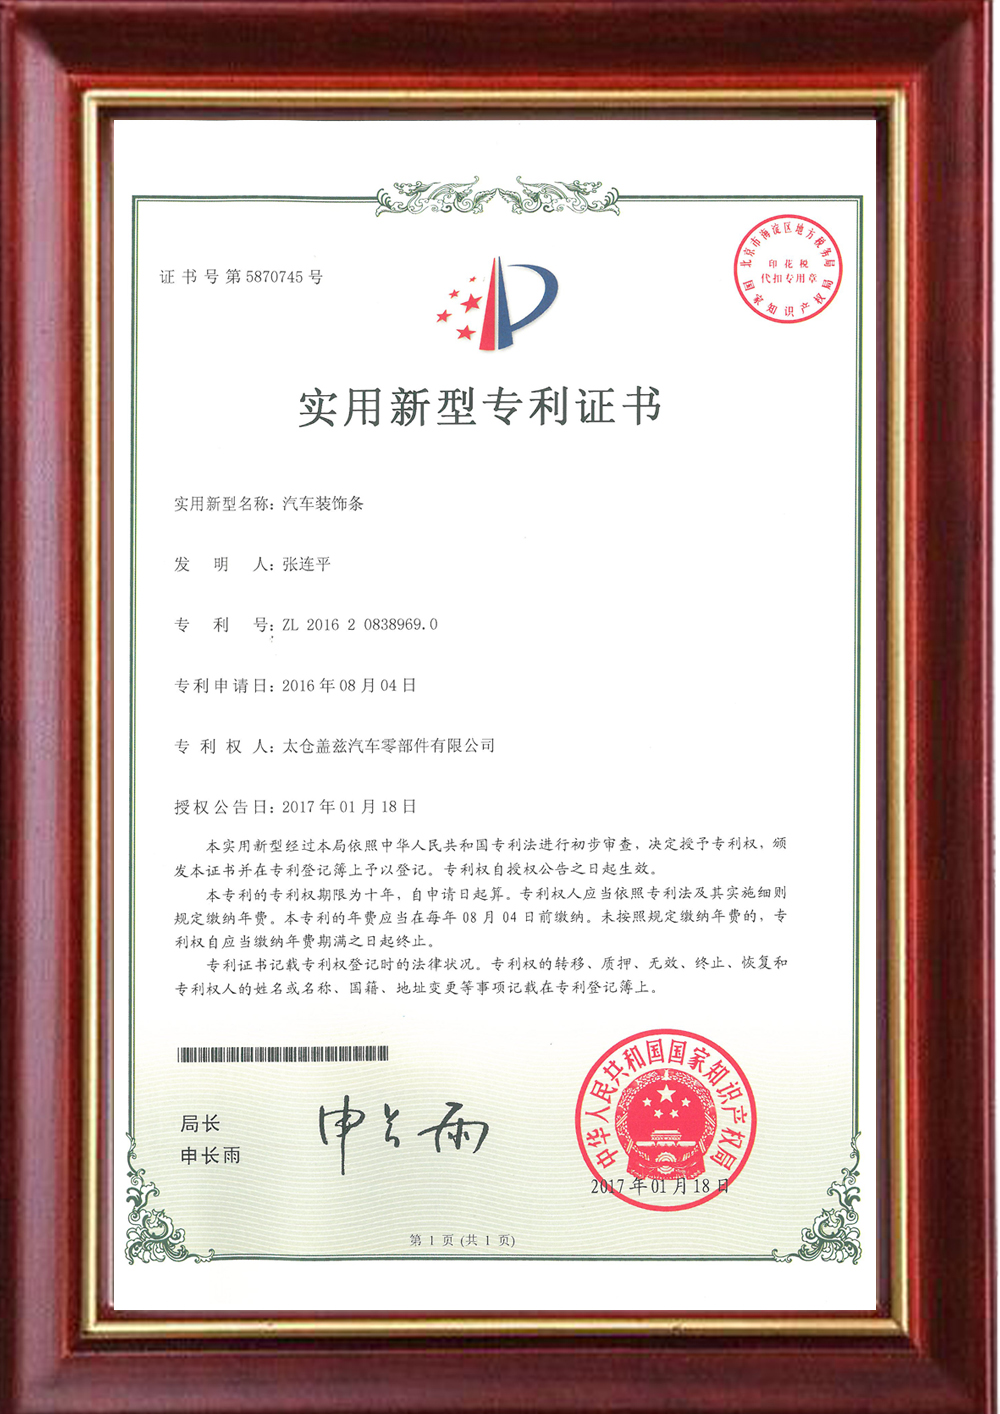 Utility model patent certificate - car decoration